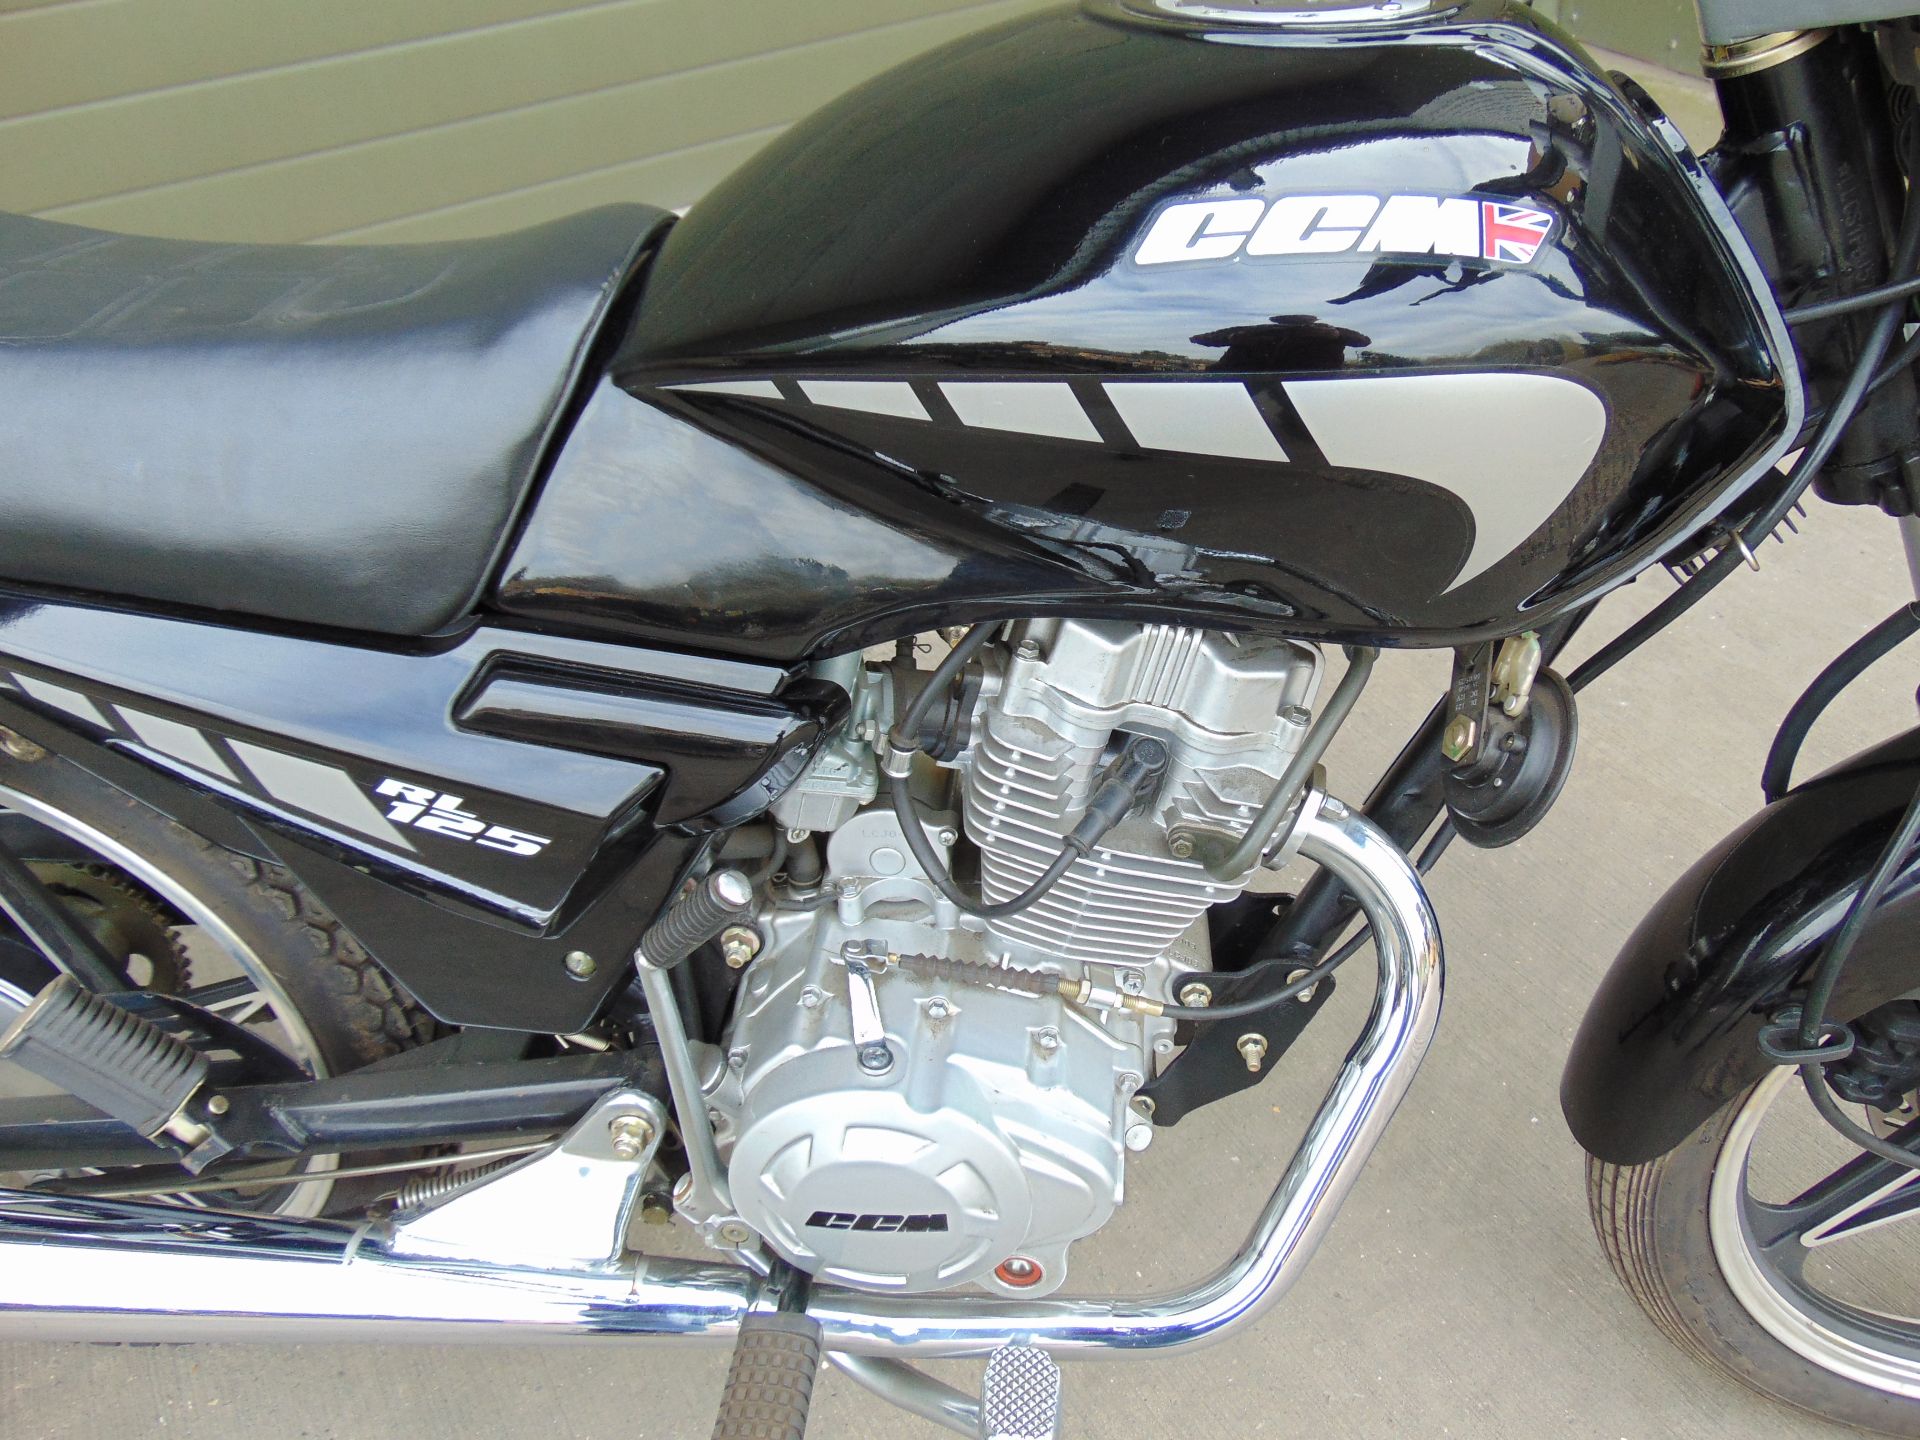 CCM RL 125 Motorbike - Image 9 of 12